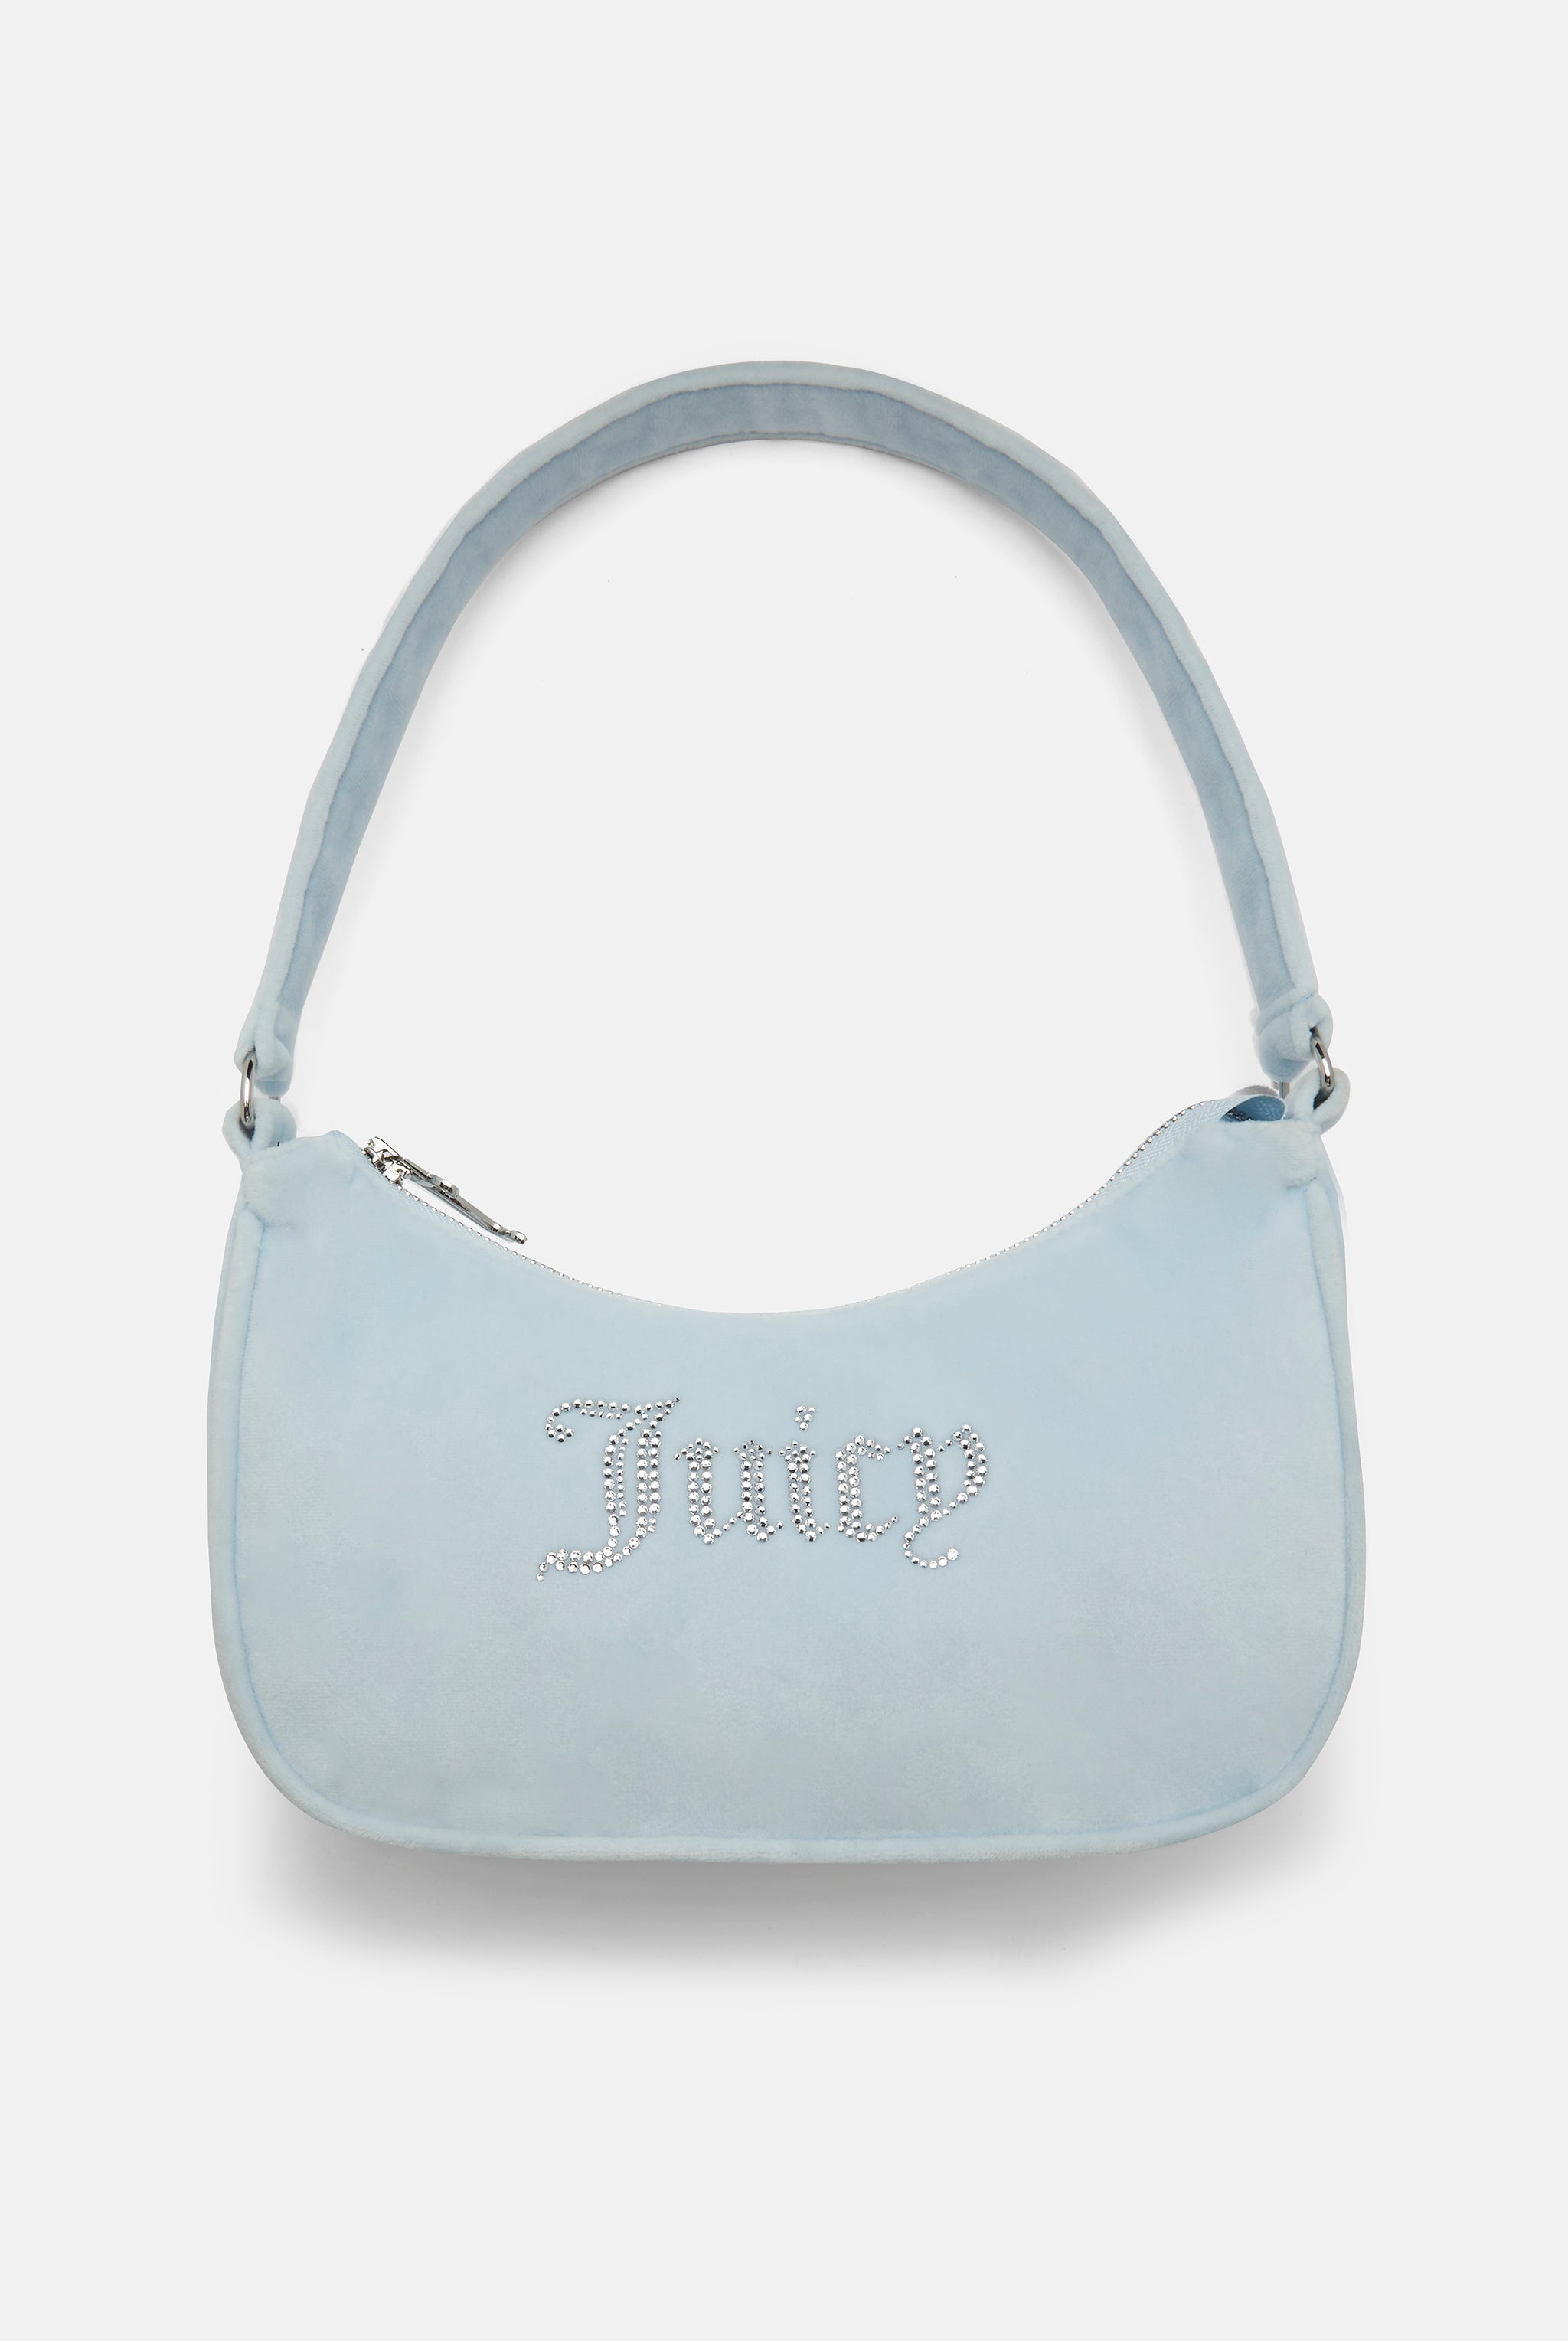 Juicy Couture White Multi Rose Shoulder Bag Purse - Juicy Couture bag -  885919703347 | Fash Brands